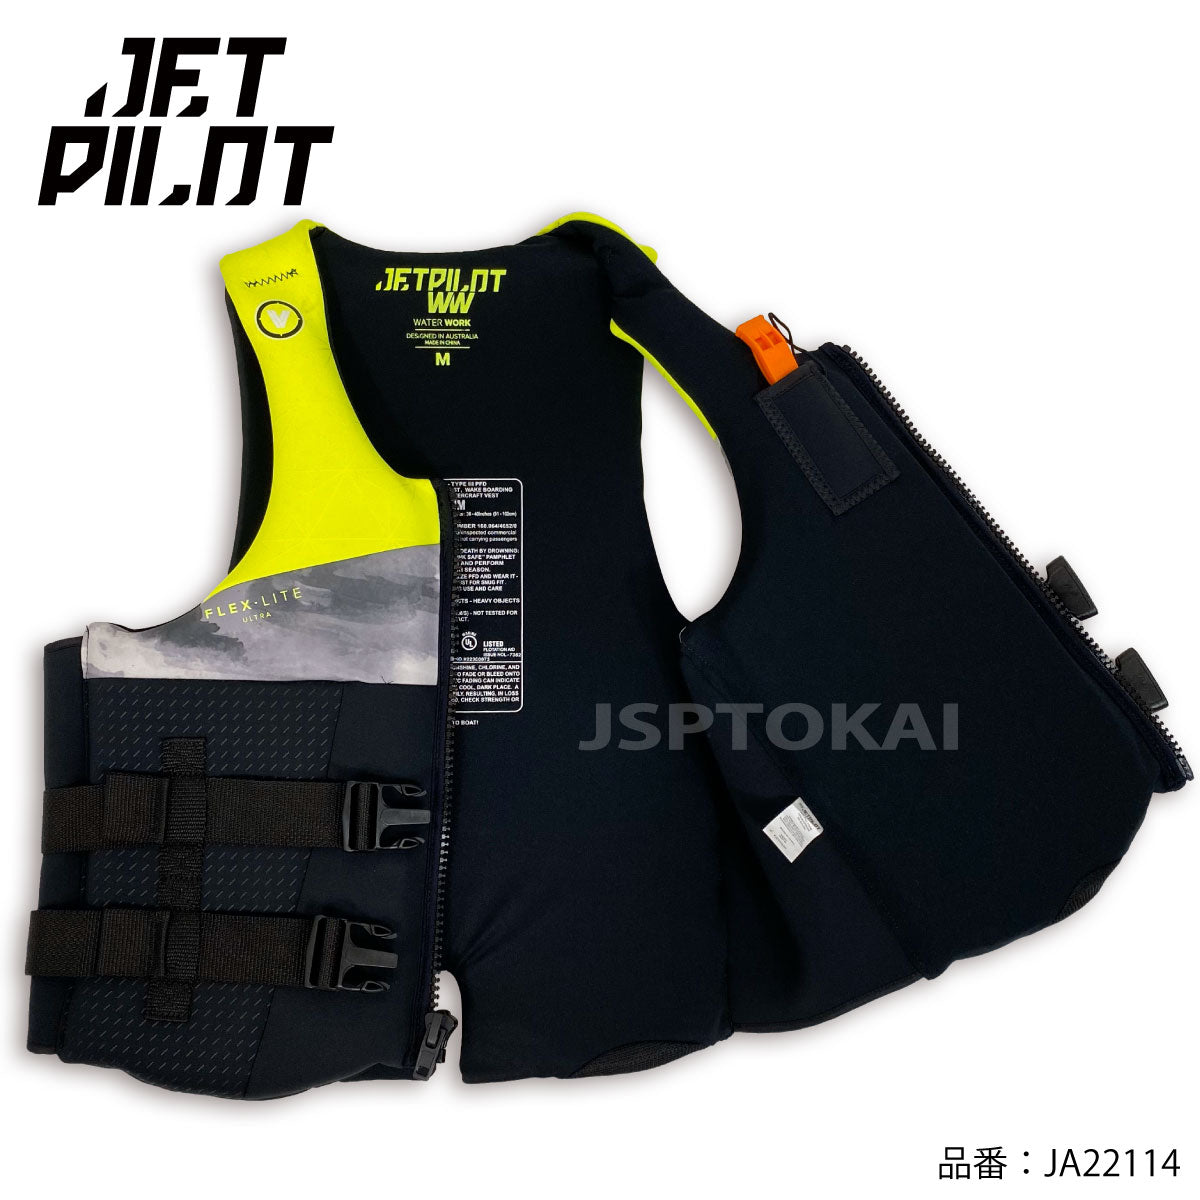 JETPILOT Jet Pilot VENTURE Genuine Life Jacket JCI Preliminary